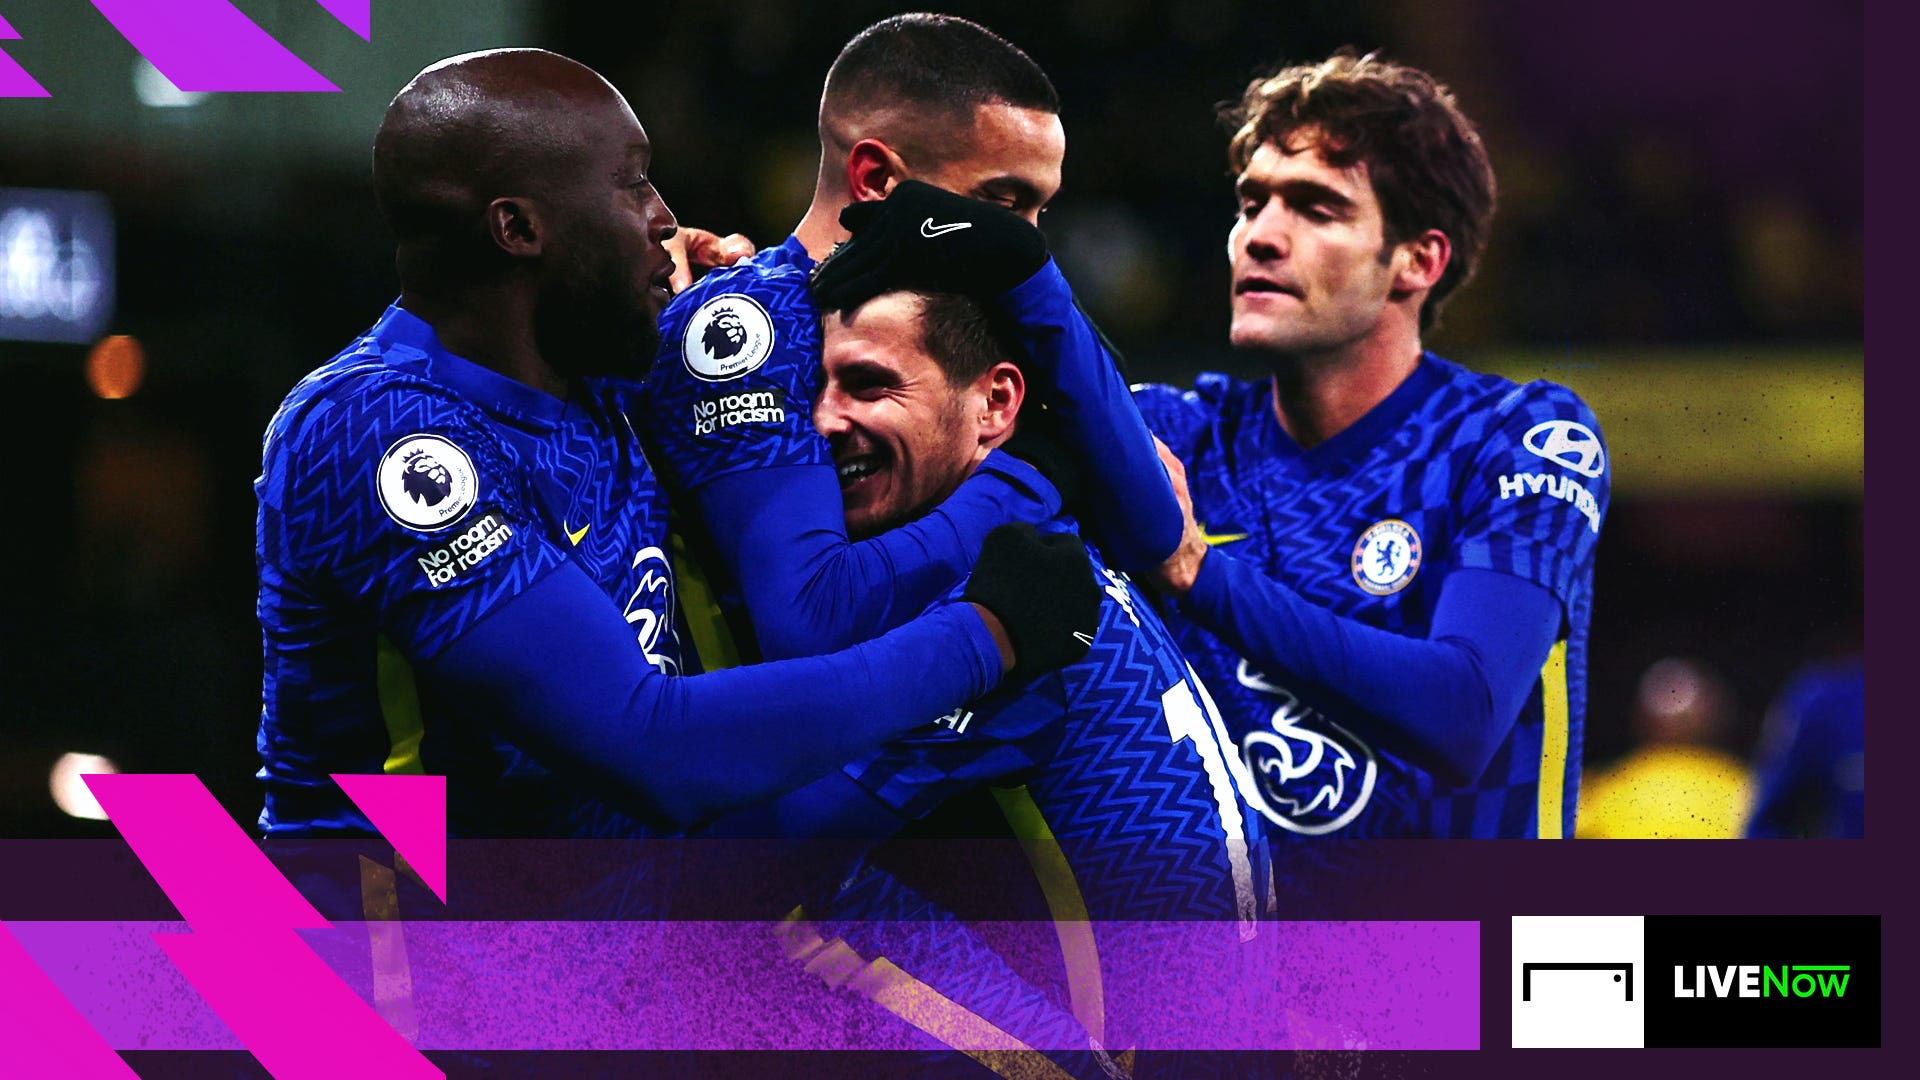 Watch Chelsea vs Everton on LIVENow Goal English Qatar